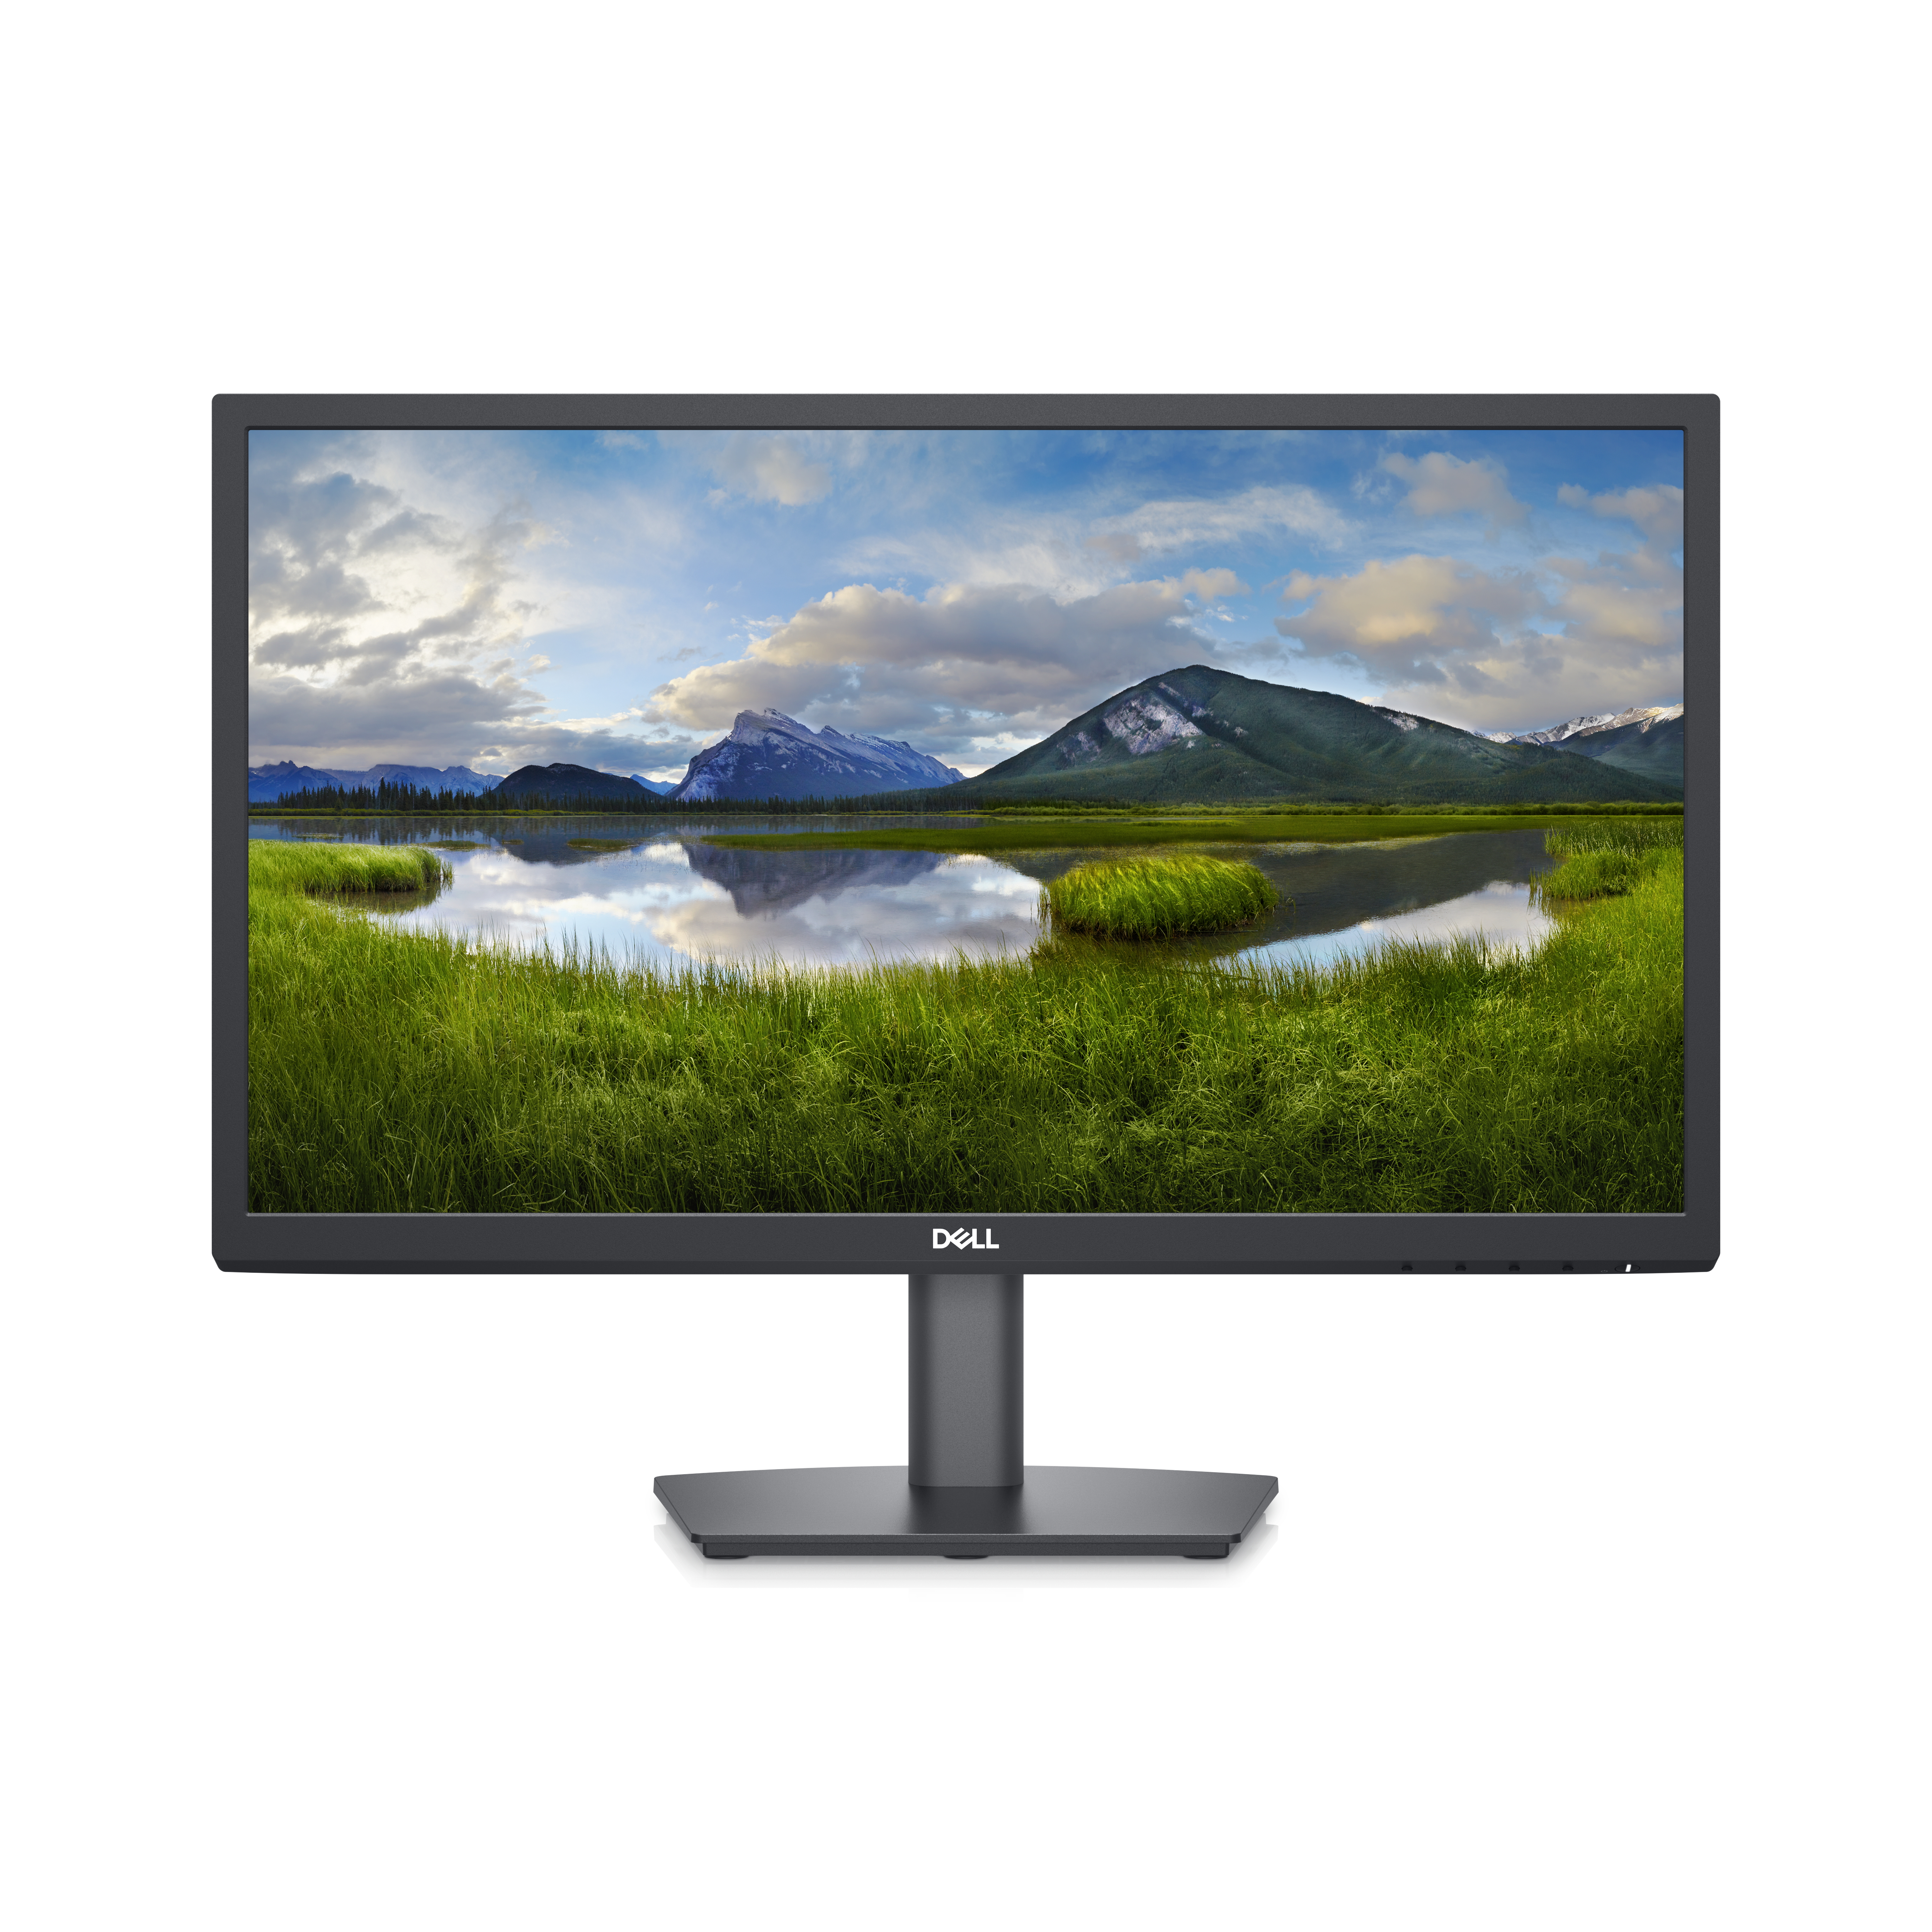 Dell E Series E2223HV - 54,5 cm (21.4 Zoll) - 1920 x 1080 Pixel - Full HD - LCD - 12 ms - Schwarz